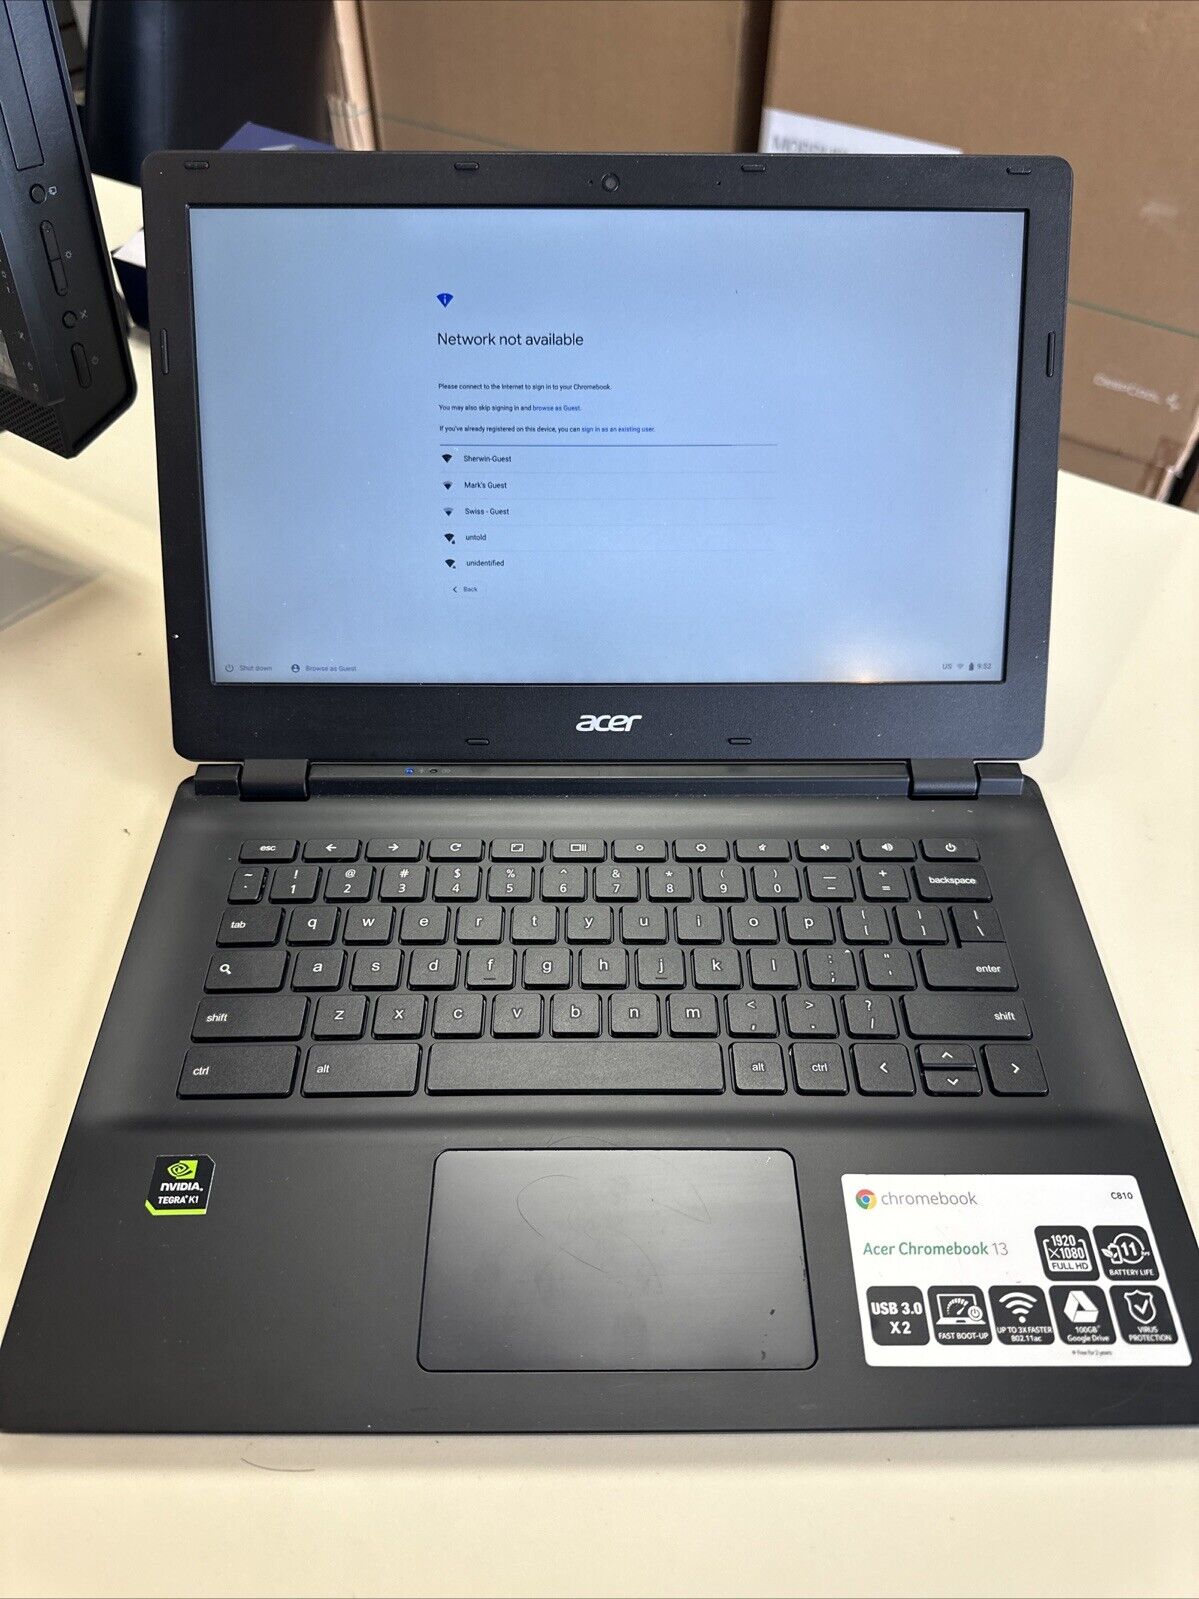 Acer Chromebook C810 13.3